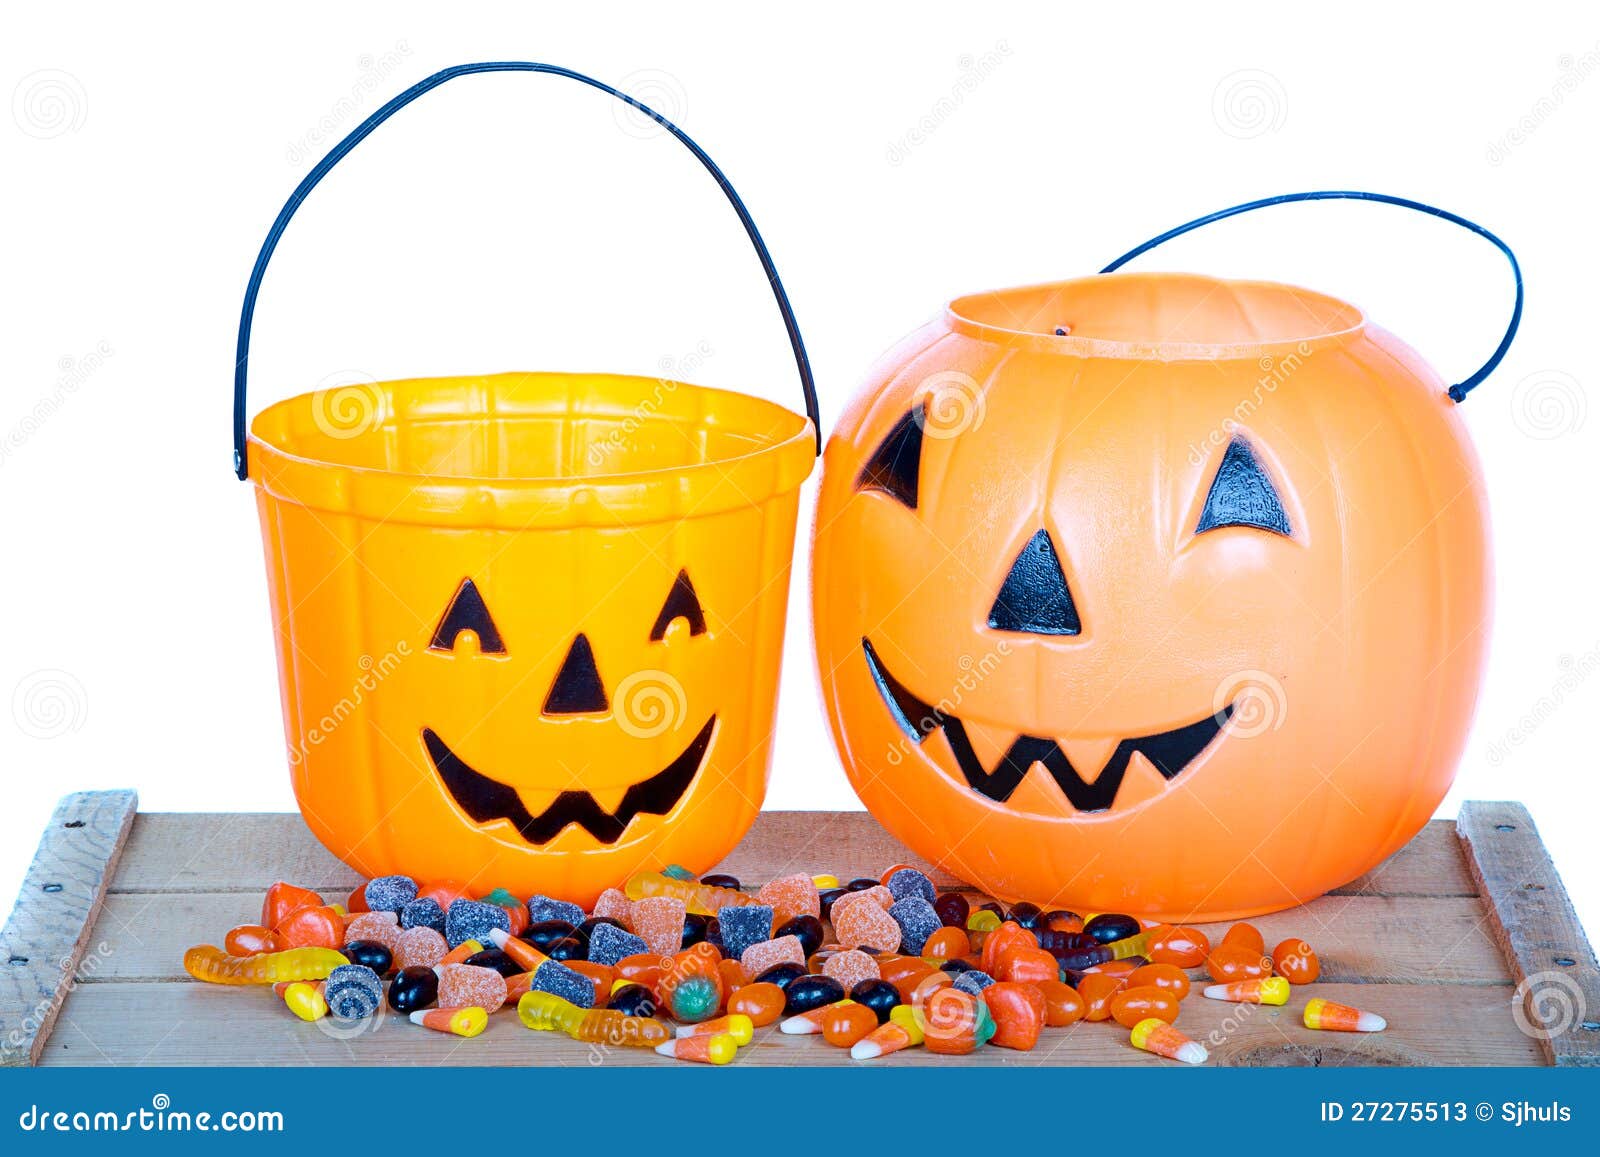 Halloween Candy And Pumpkin Bucket On Wood Stock Image - Image of ...